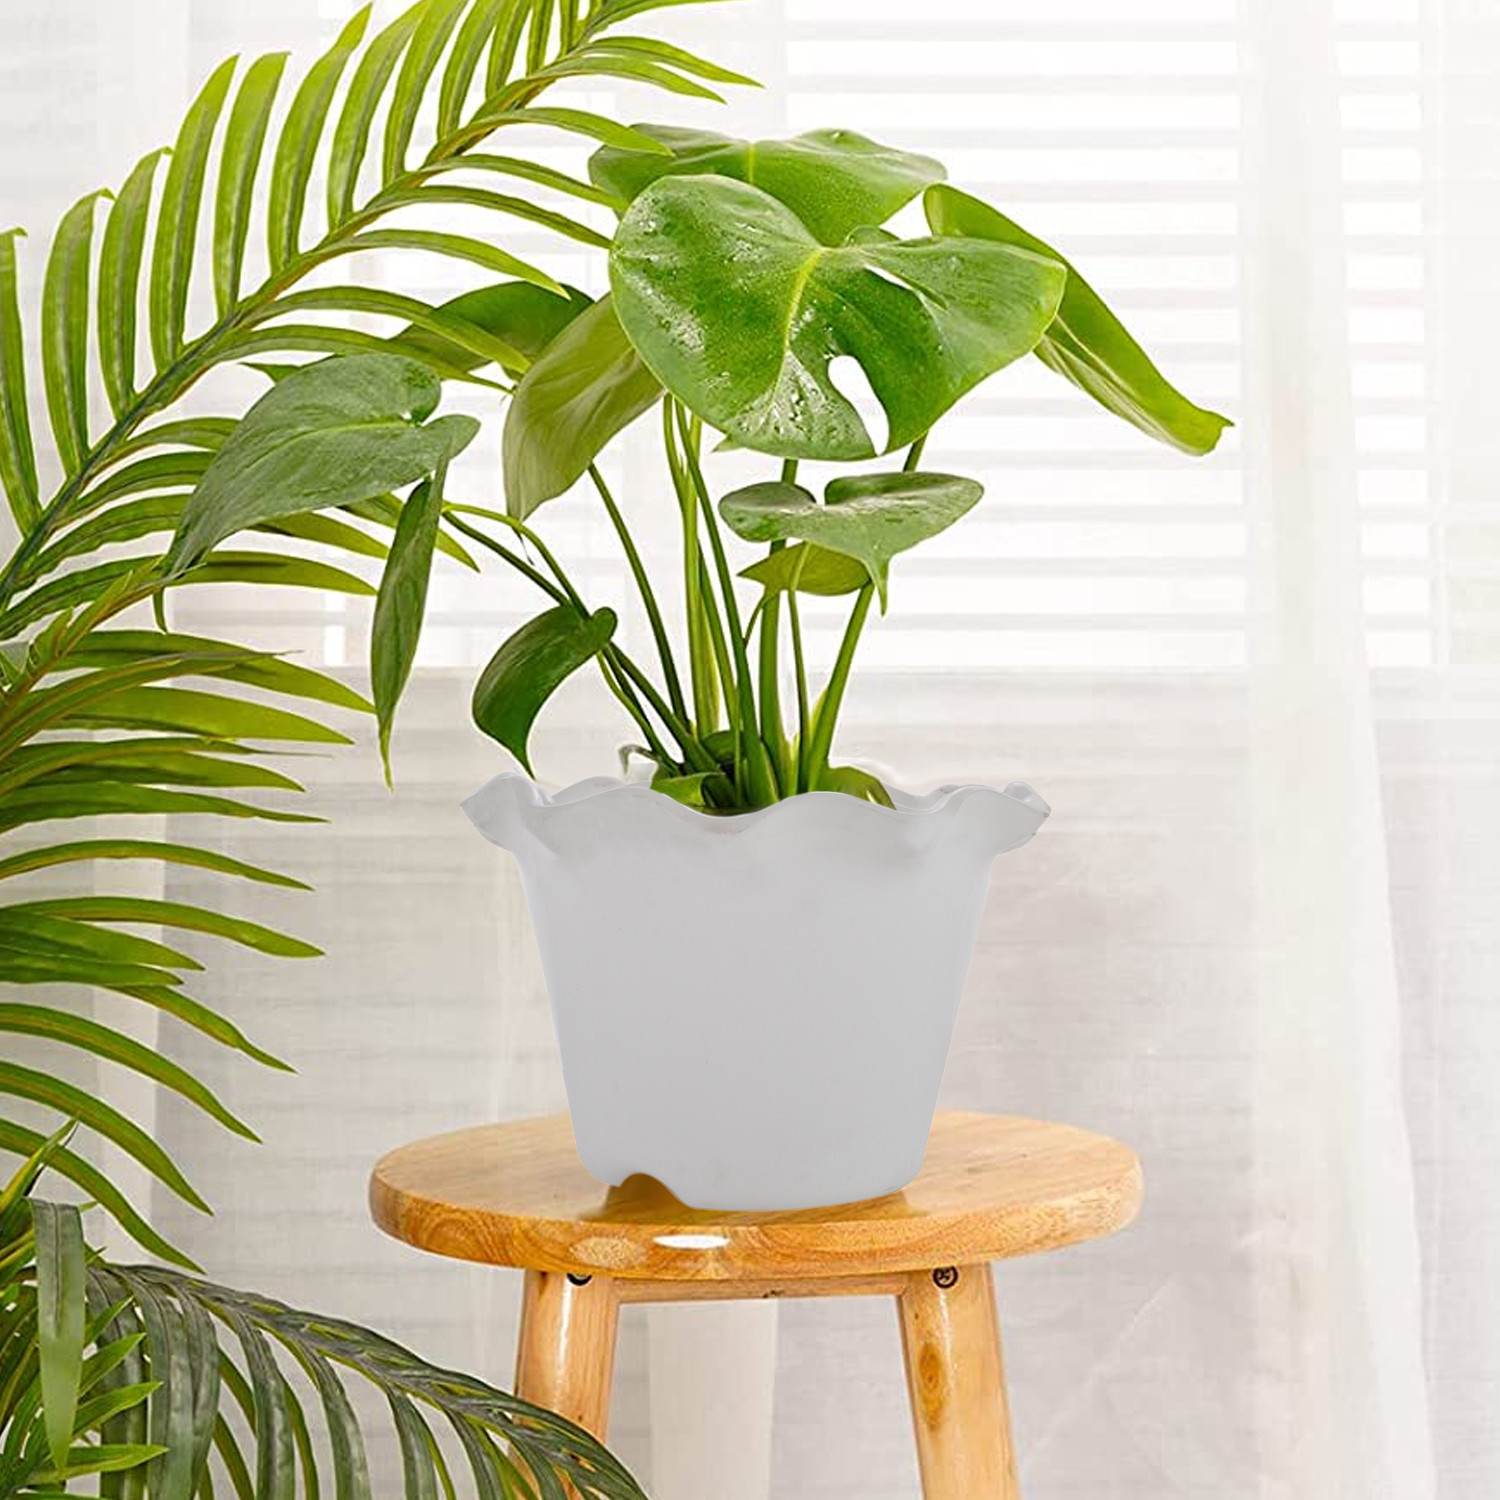 Kuber Industries Blossom Flower Pot|Durable Plastic Flower Pots|Planters for Home Décor|Garden|Living Room|Balcony (White)